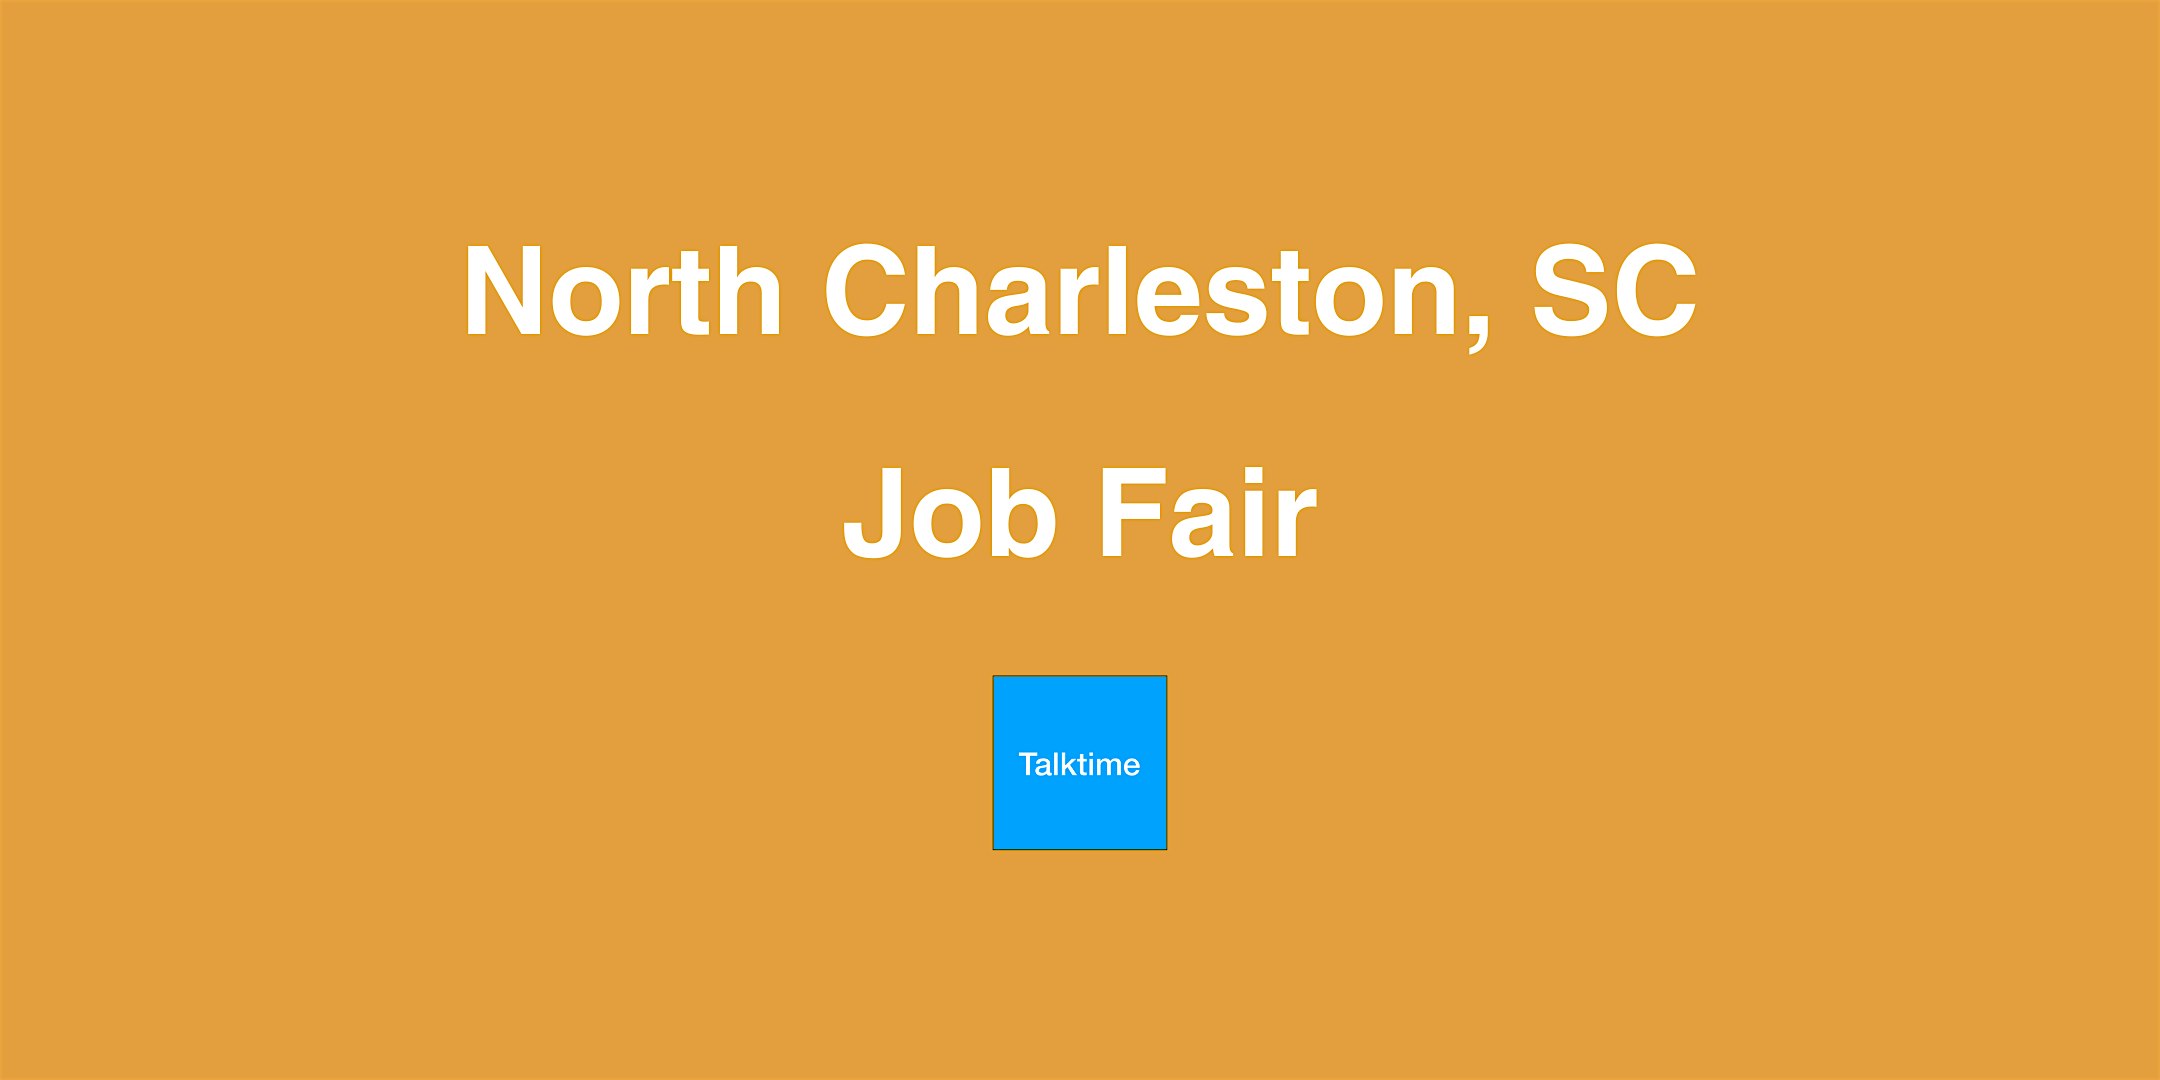 Job Fair - North Charleston